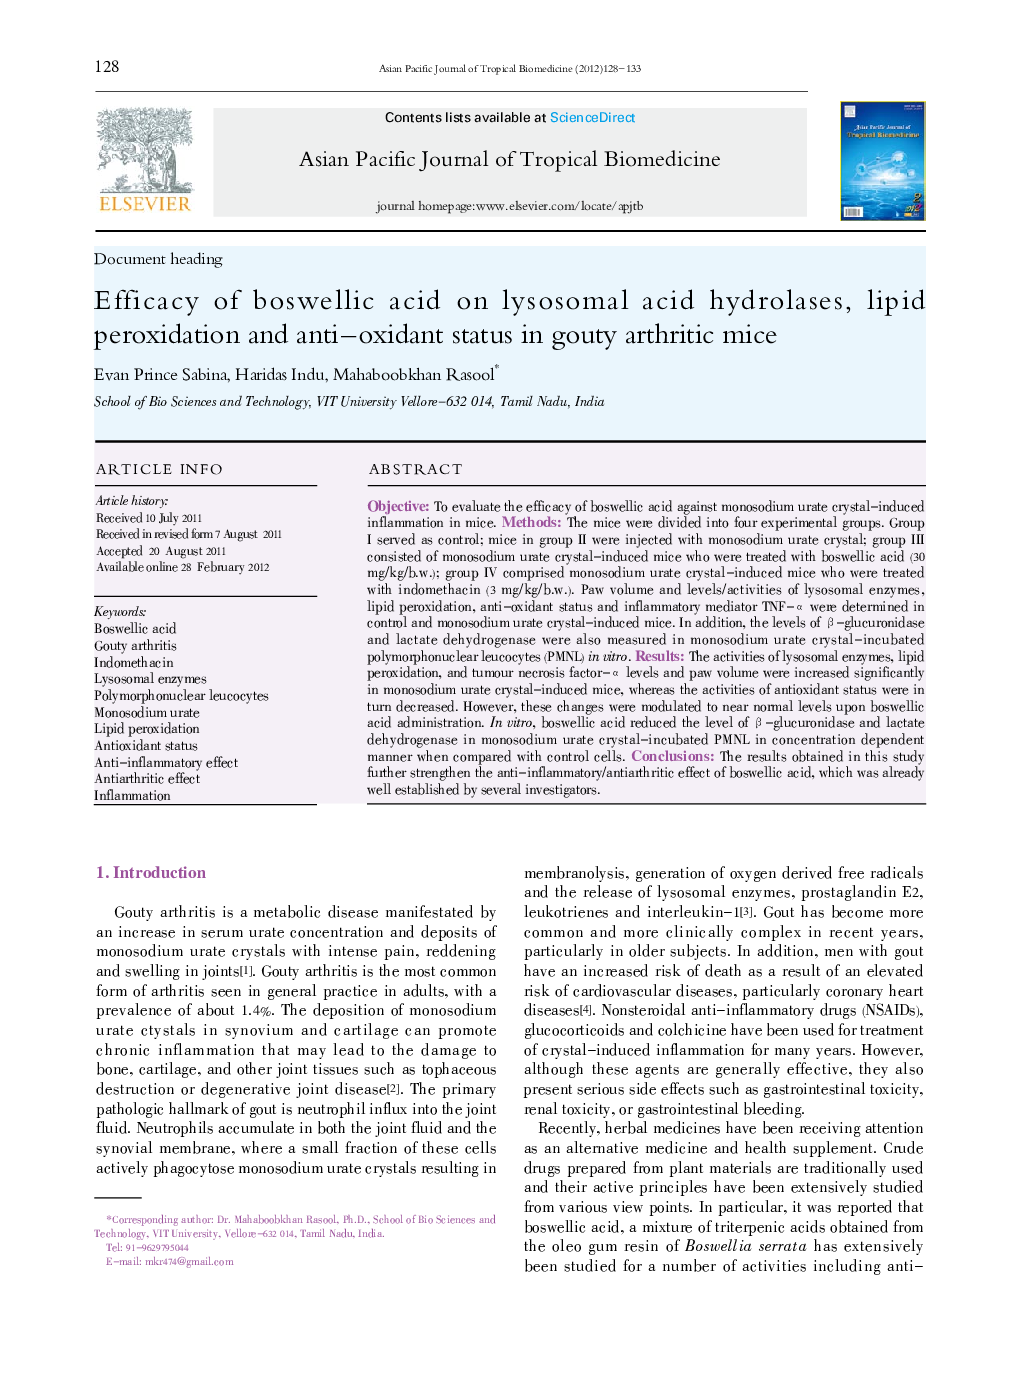 Efficacy of boswellic acid on lysosomal acid hydrolases, lipid peroxidation and anti-oxidant status in gouty arthritic mice